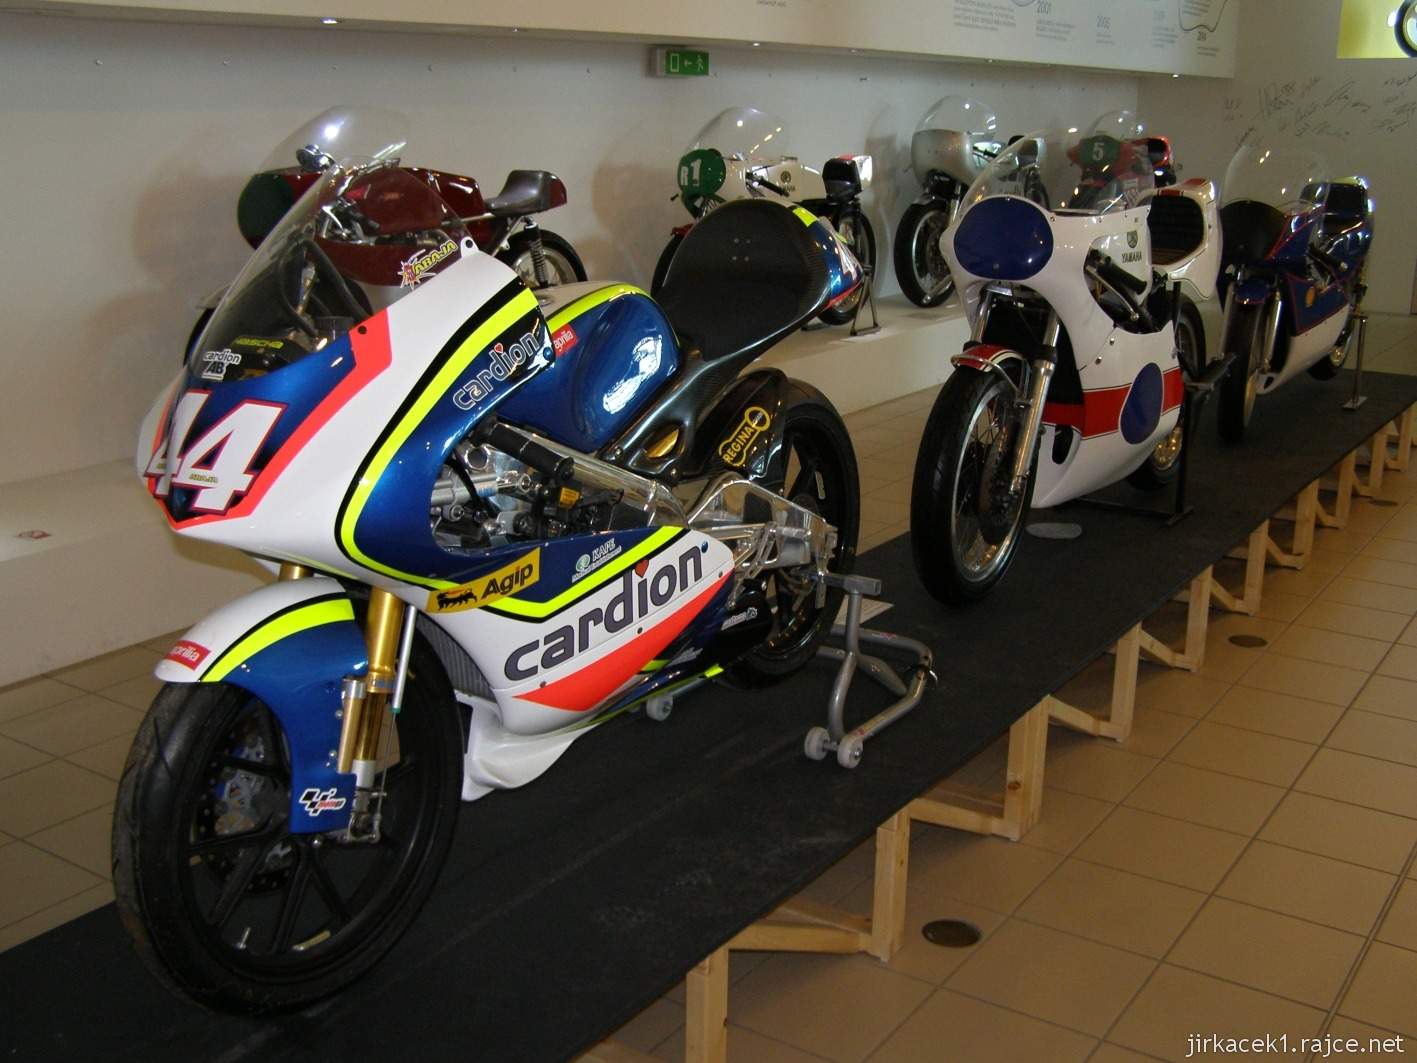 Brno - Technické muzeum 04 - expozice motorky